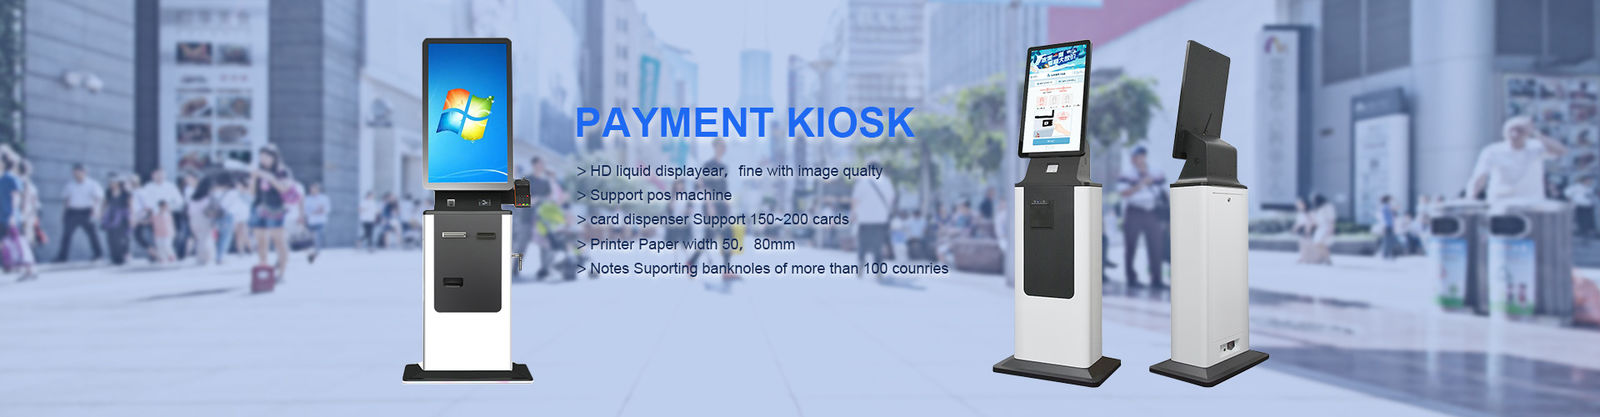 Self Payment Kiosk